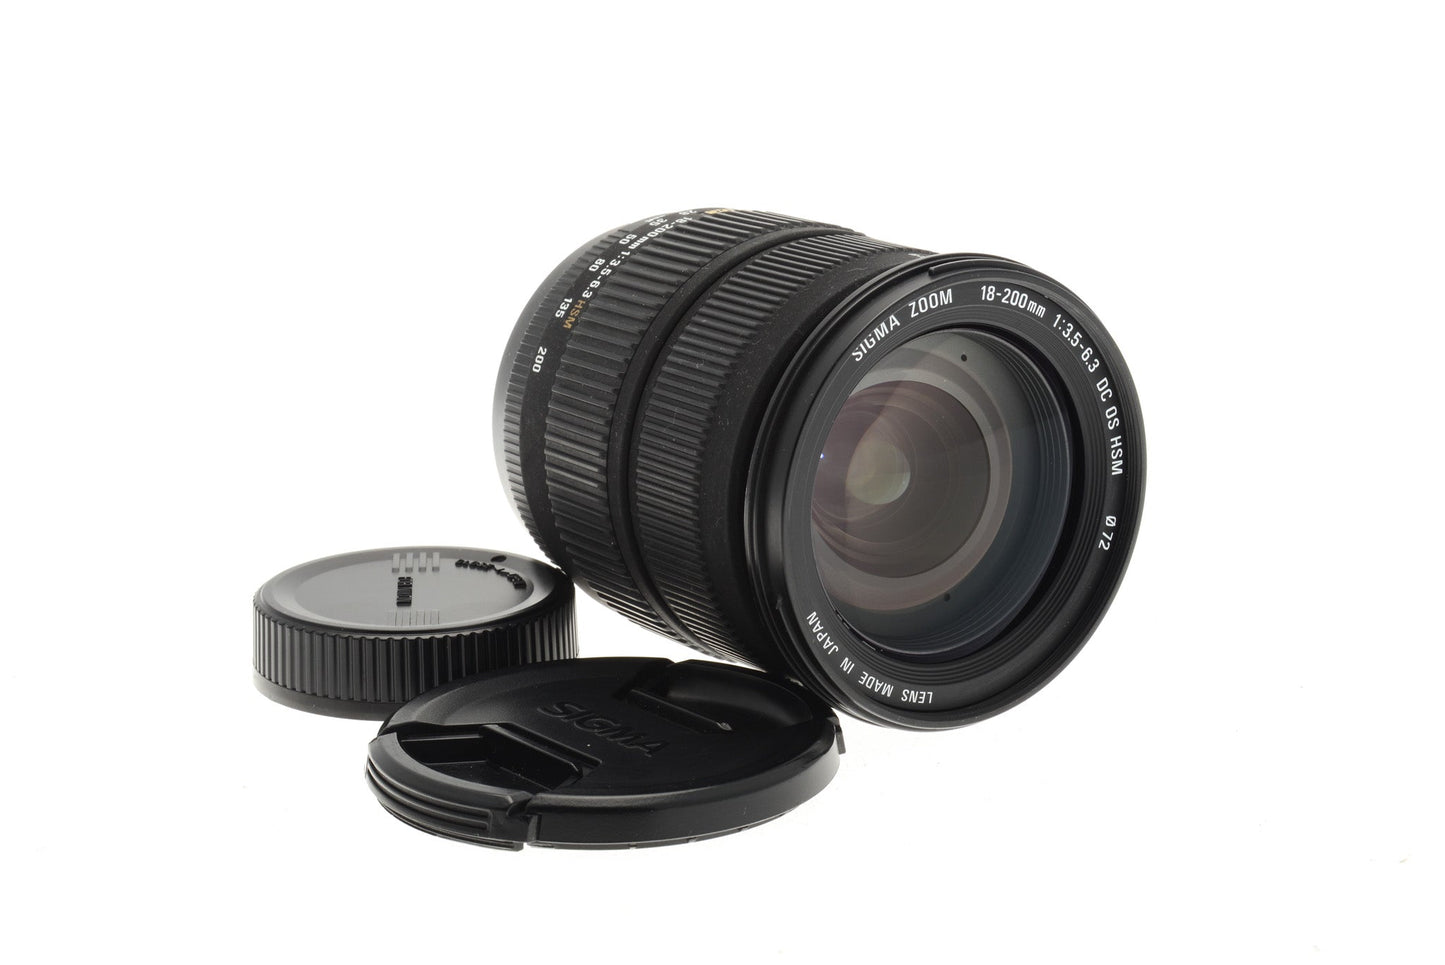 Sigma 18-200mm f3.5-6.3 DC OS HSM - Lens